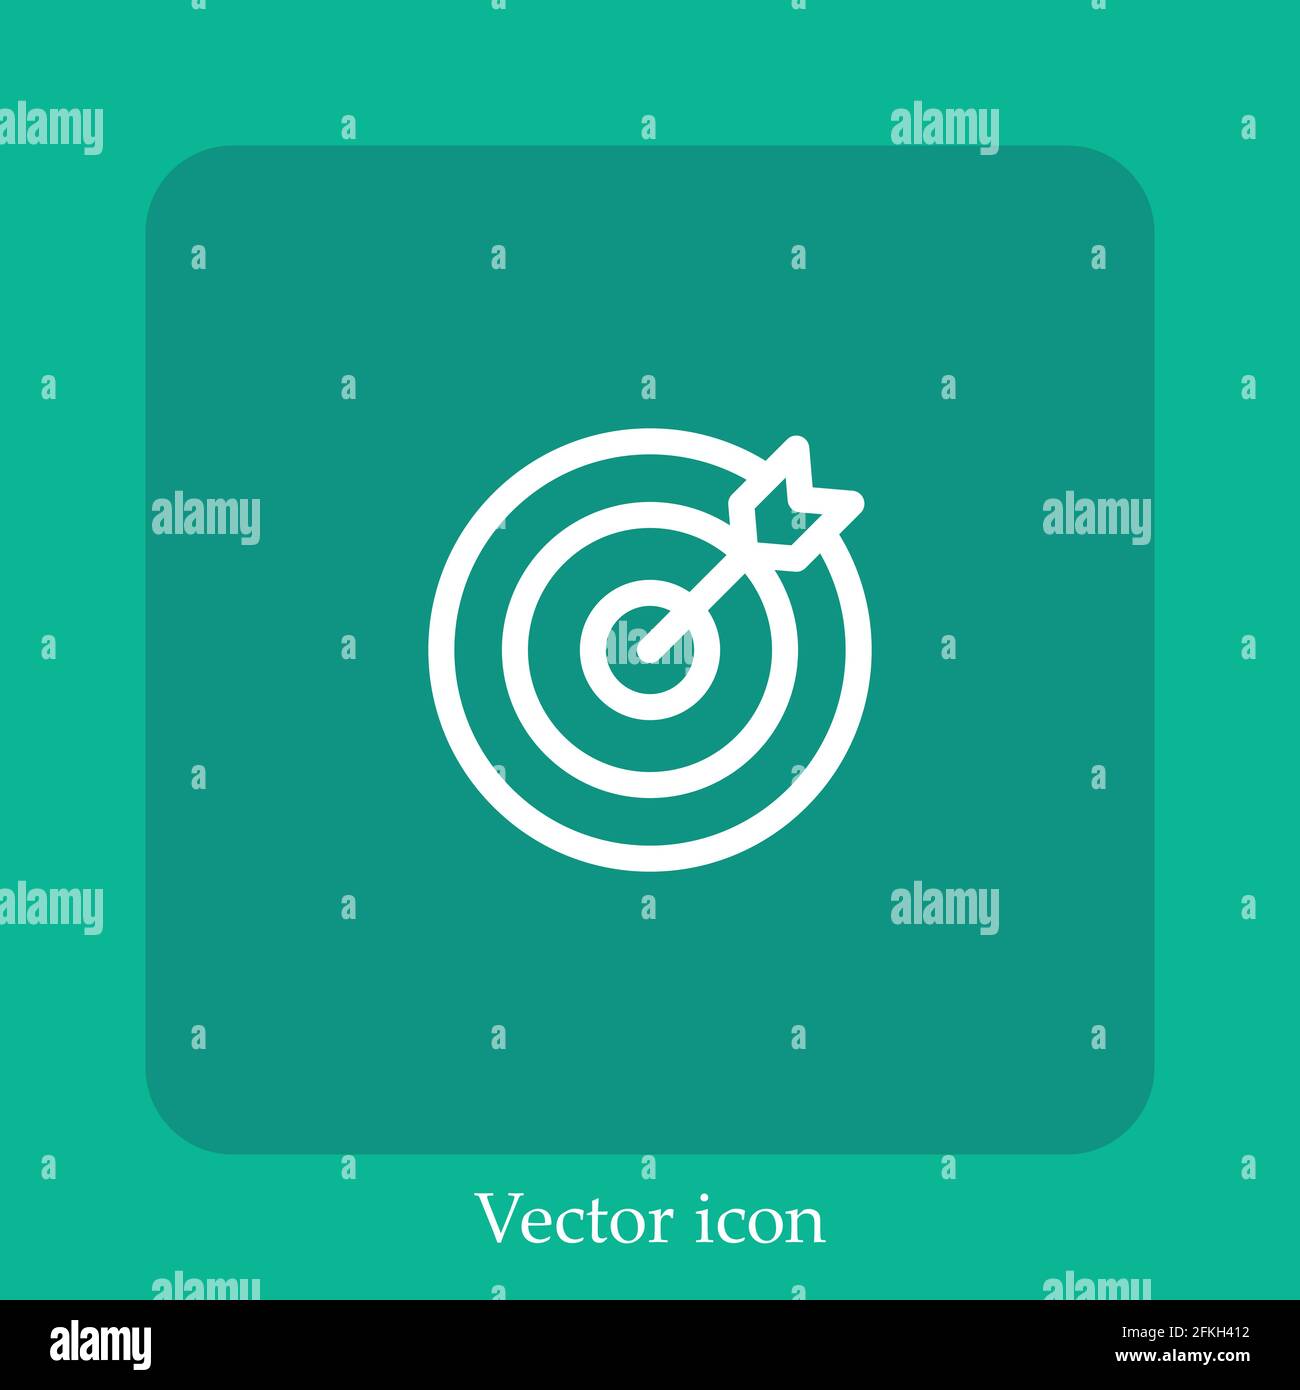 goal vector icon linear icon.Line with Editable stroke Stock Vector